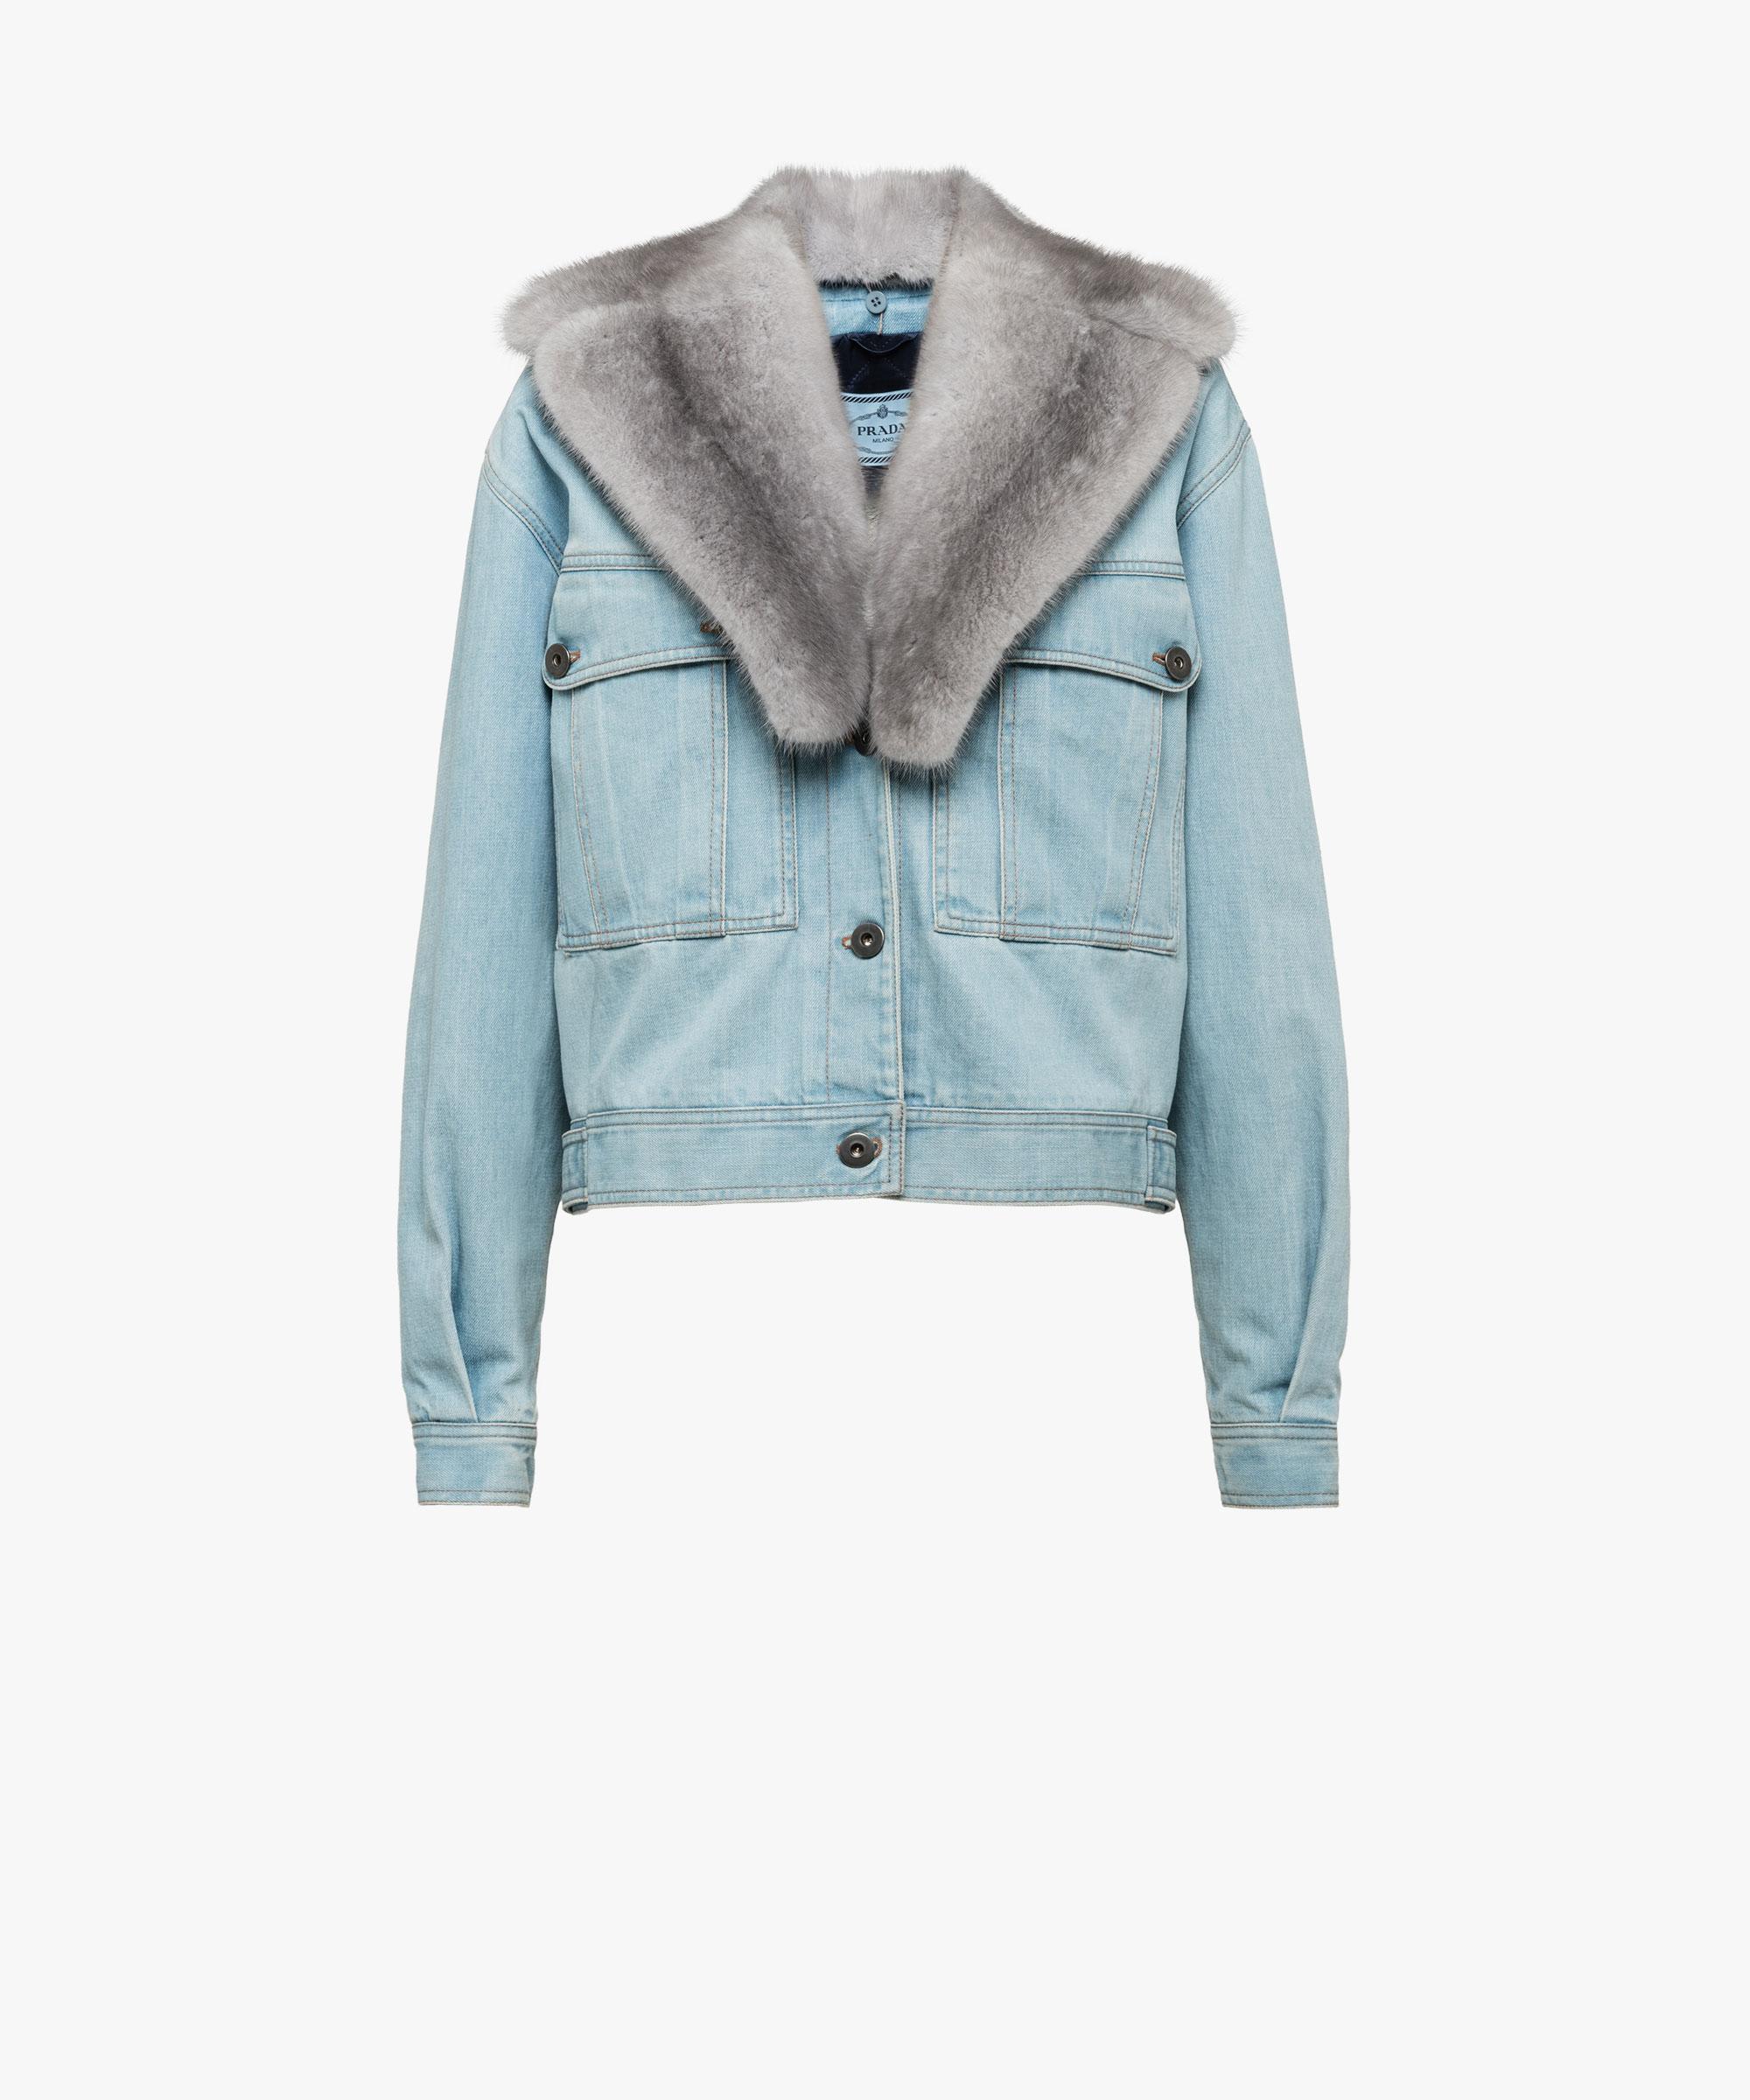 Prada Denim Jacket With Fur Collar in Light Blue (Blue) - Lyst